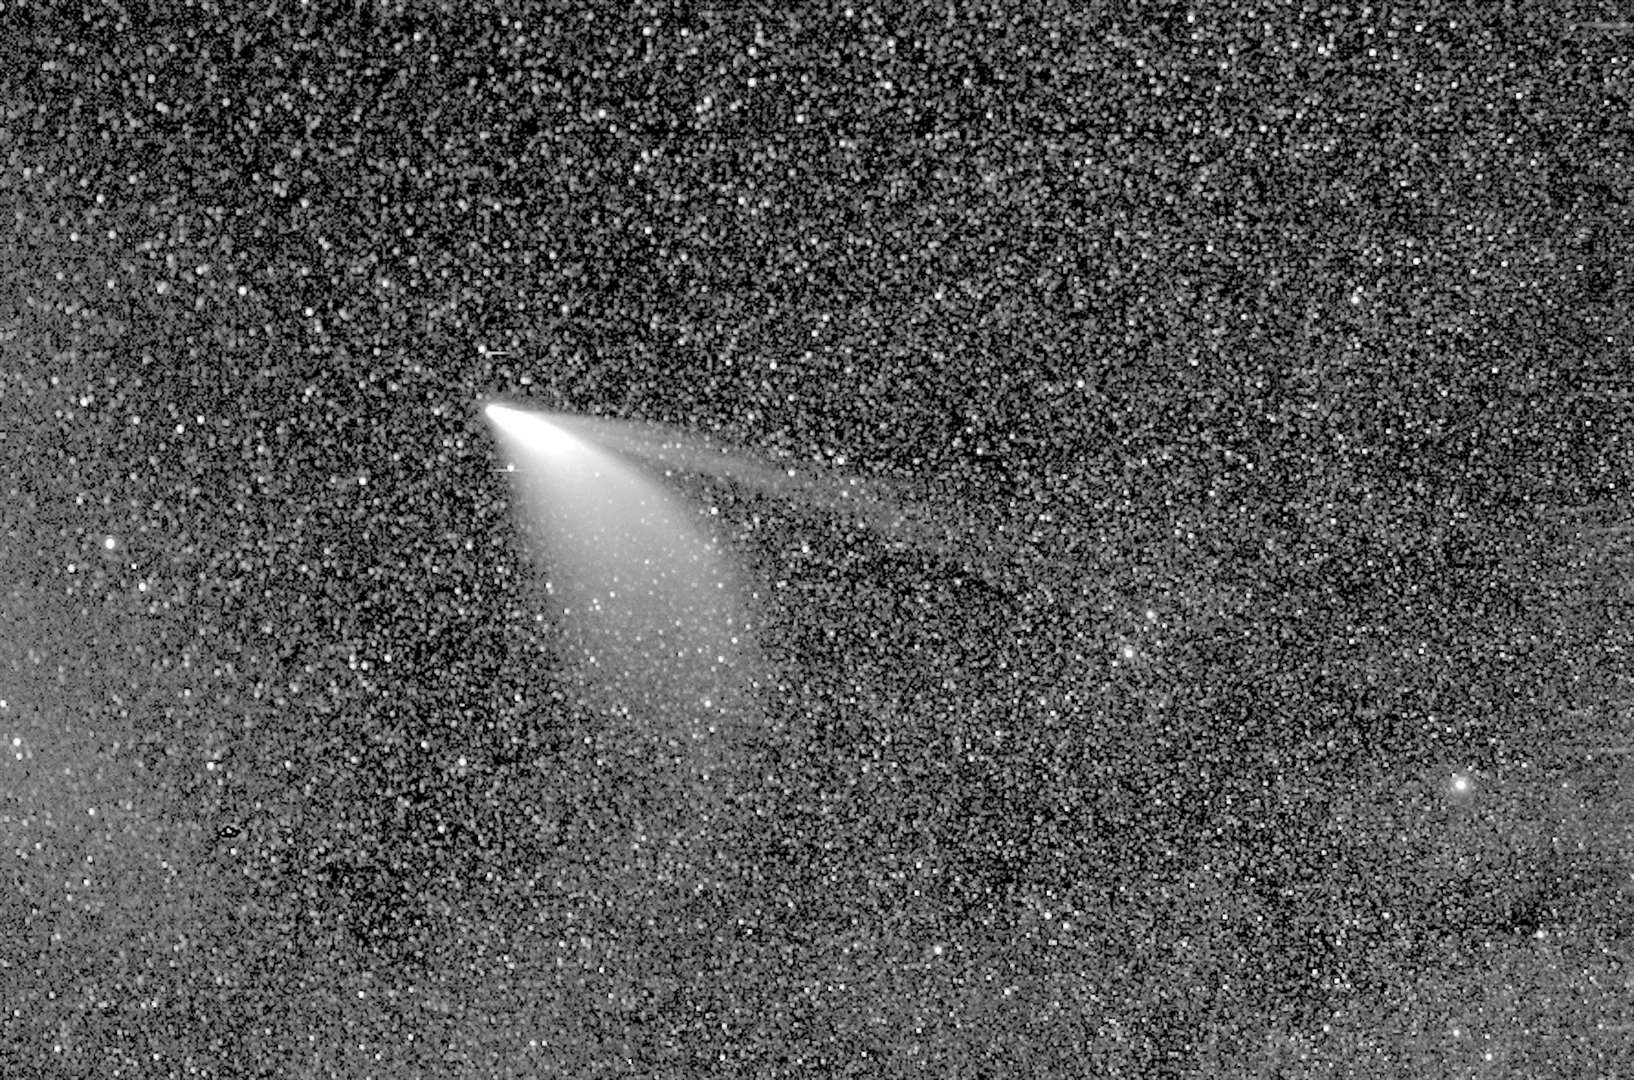 Resident captures 'Neowise' comet over the Okanagan